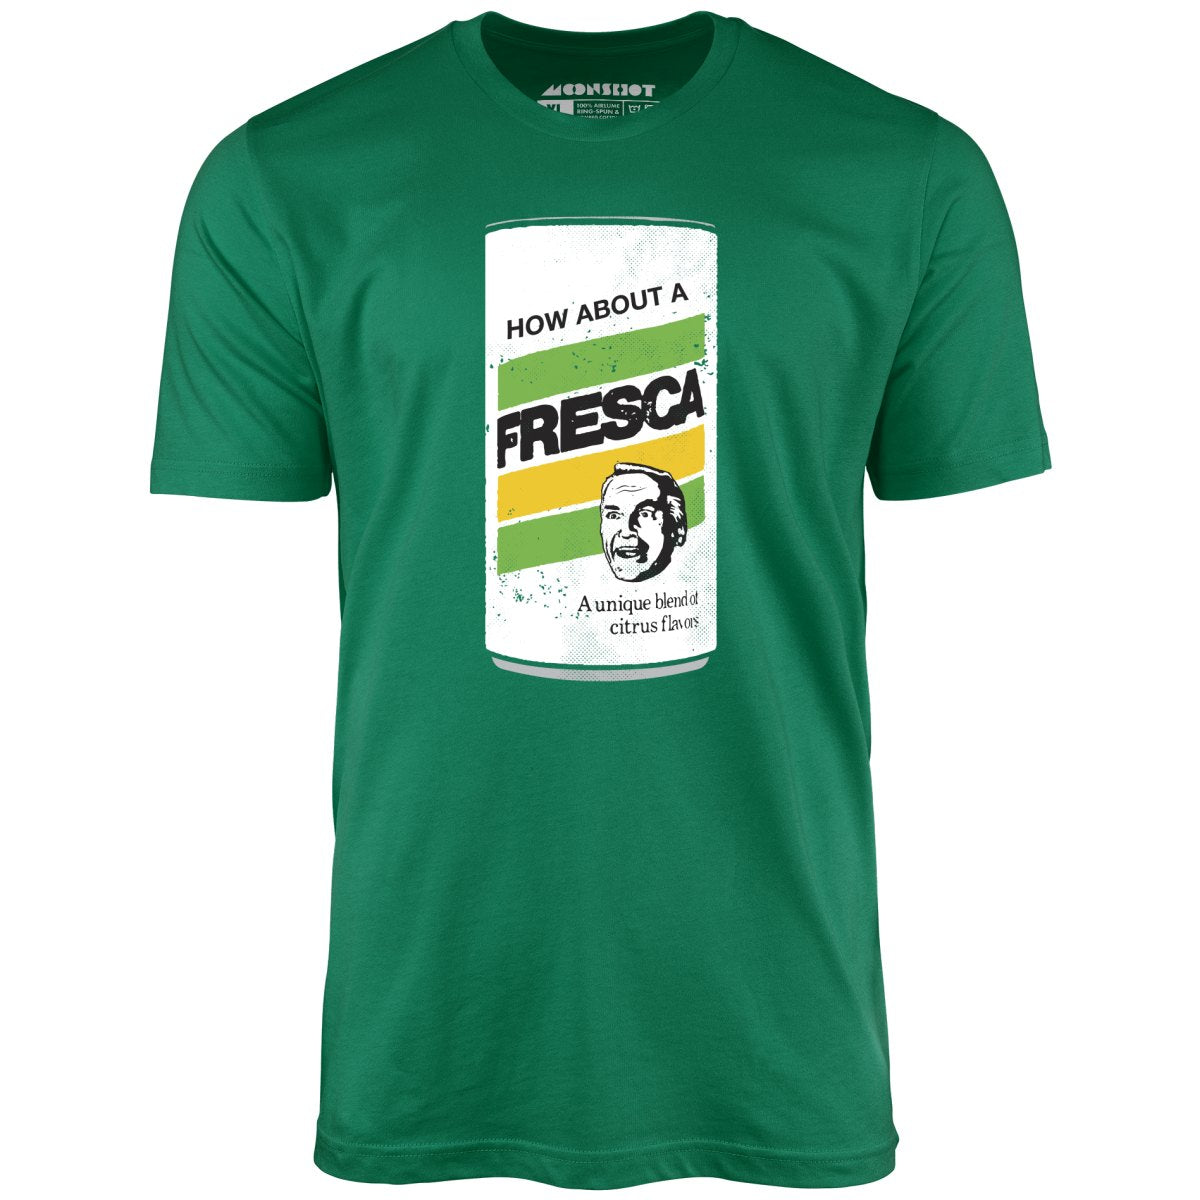 How About a Fresca? - Unisex T-Shirt